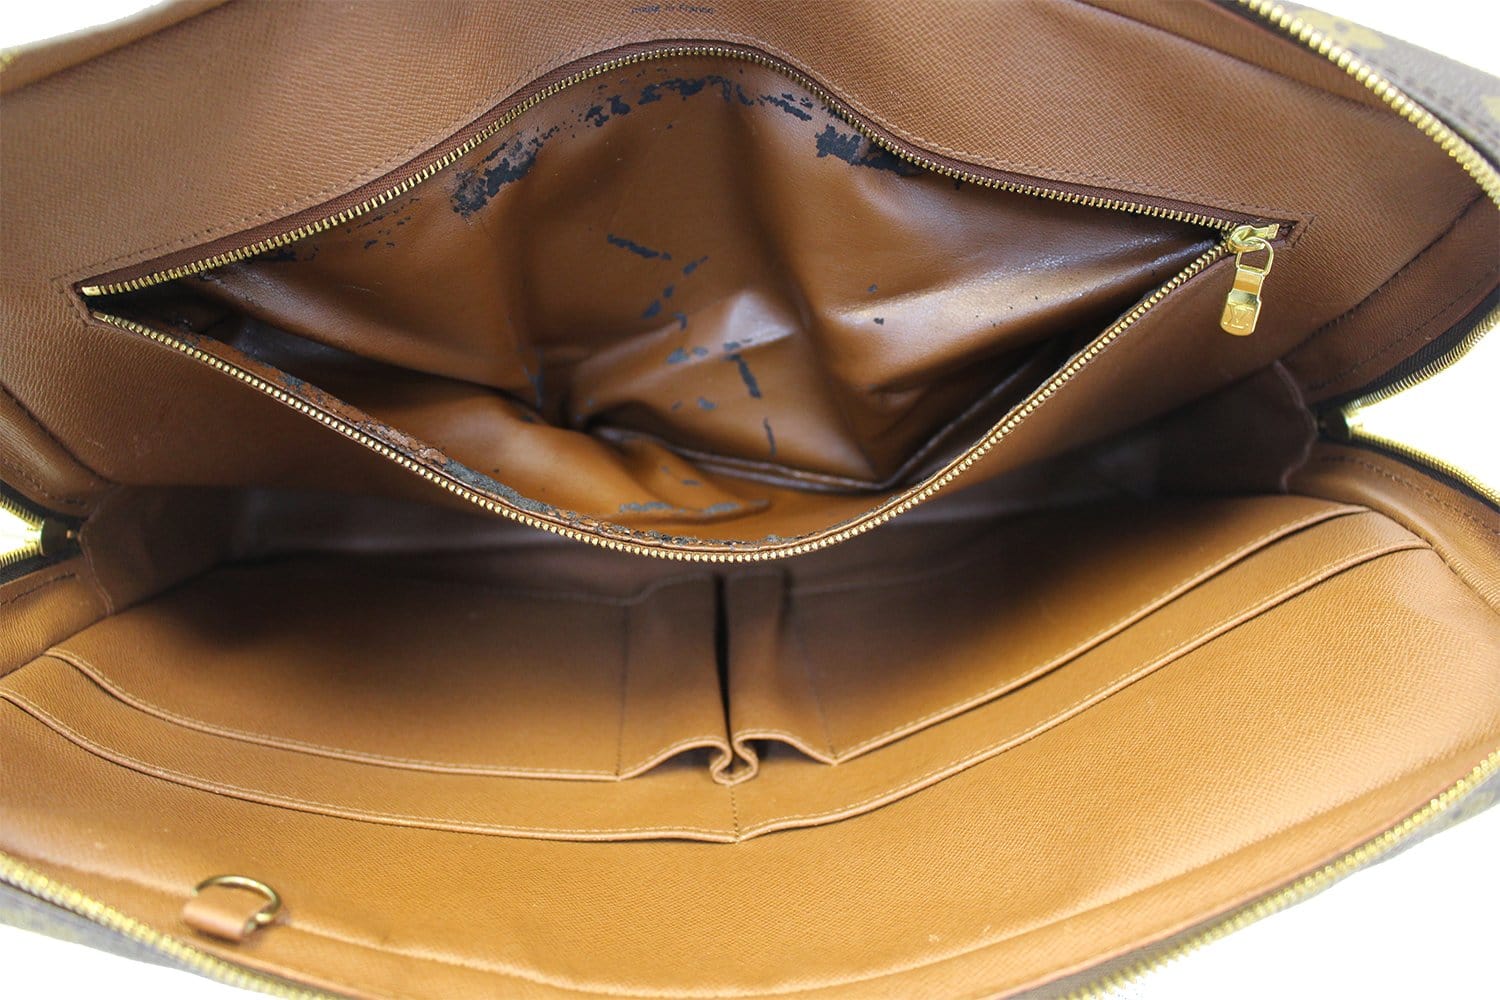 Louis Vuitton Nomade Leather Briefcase Bag